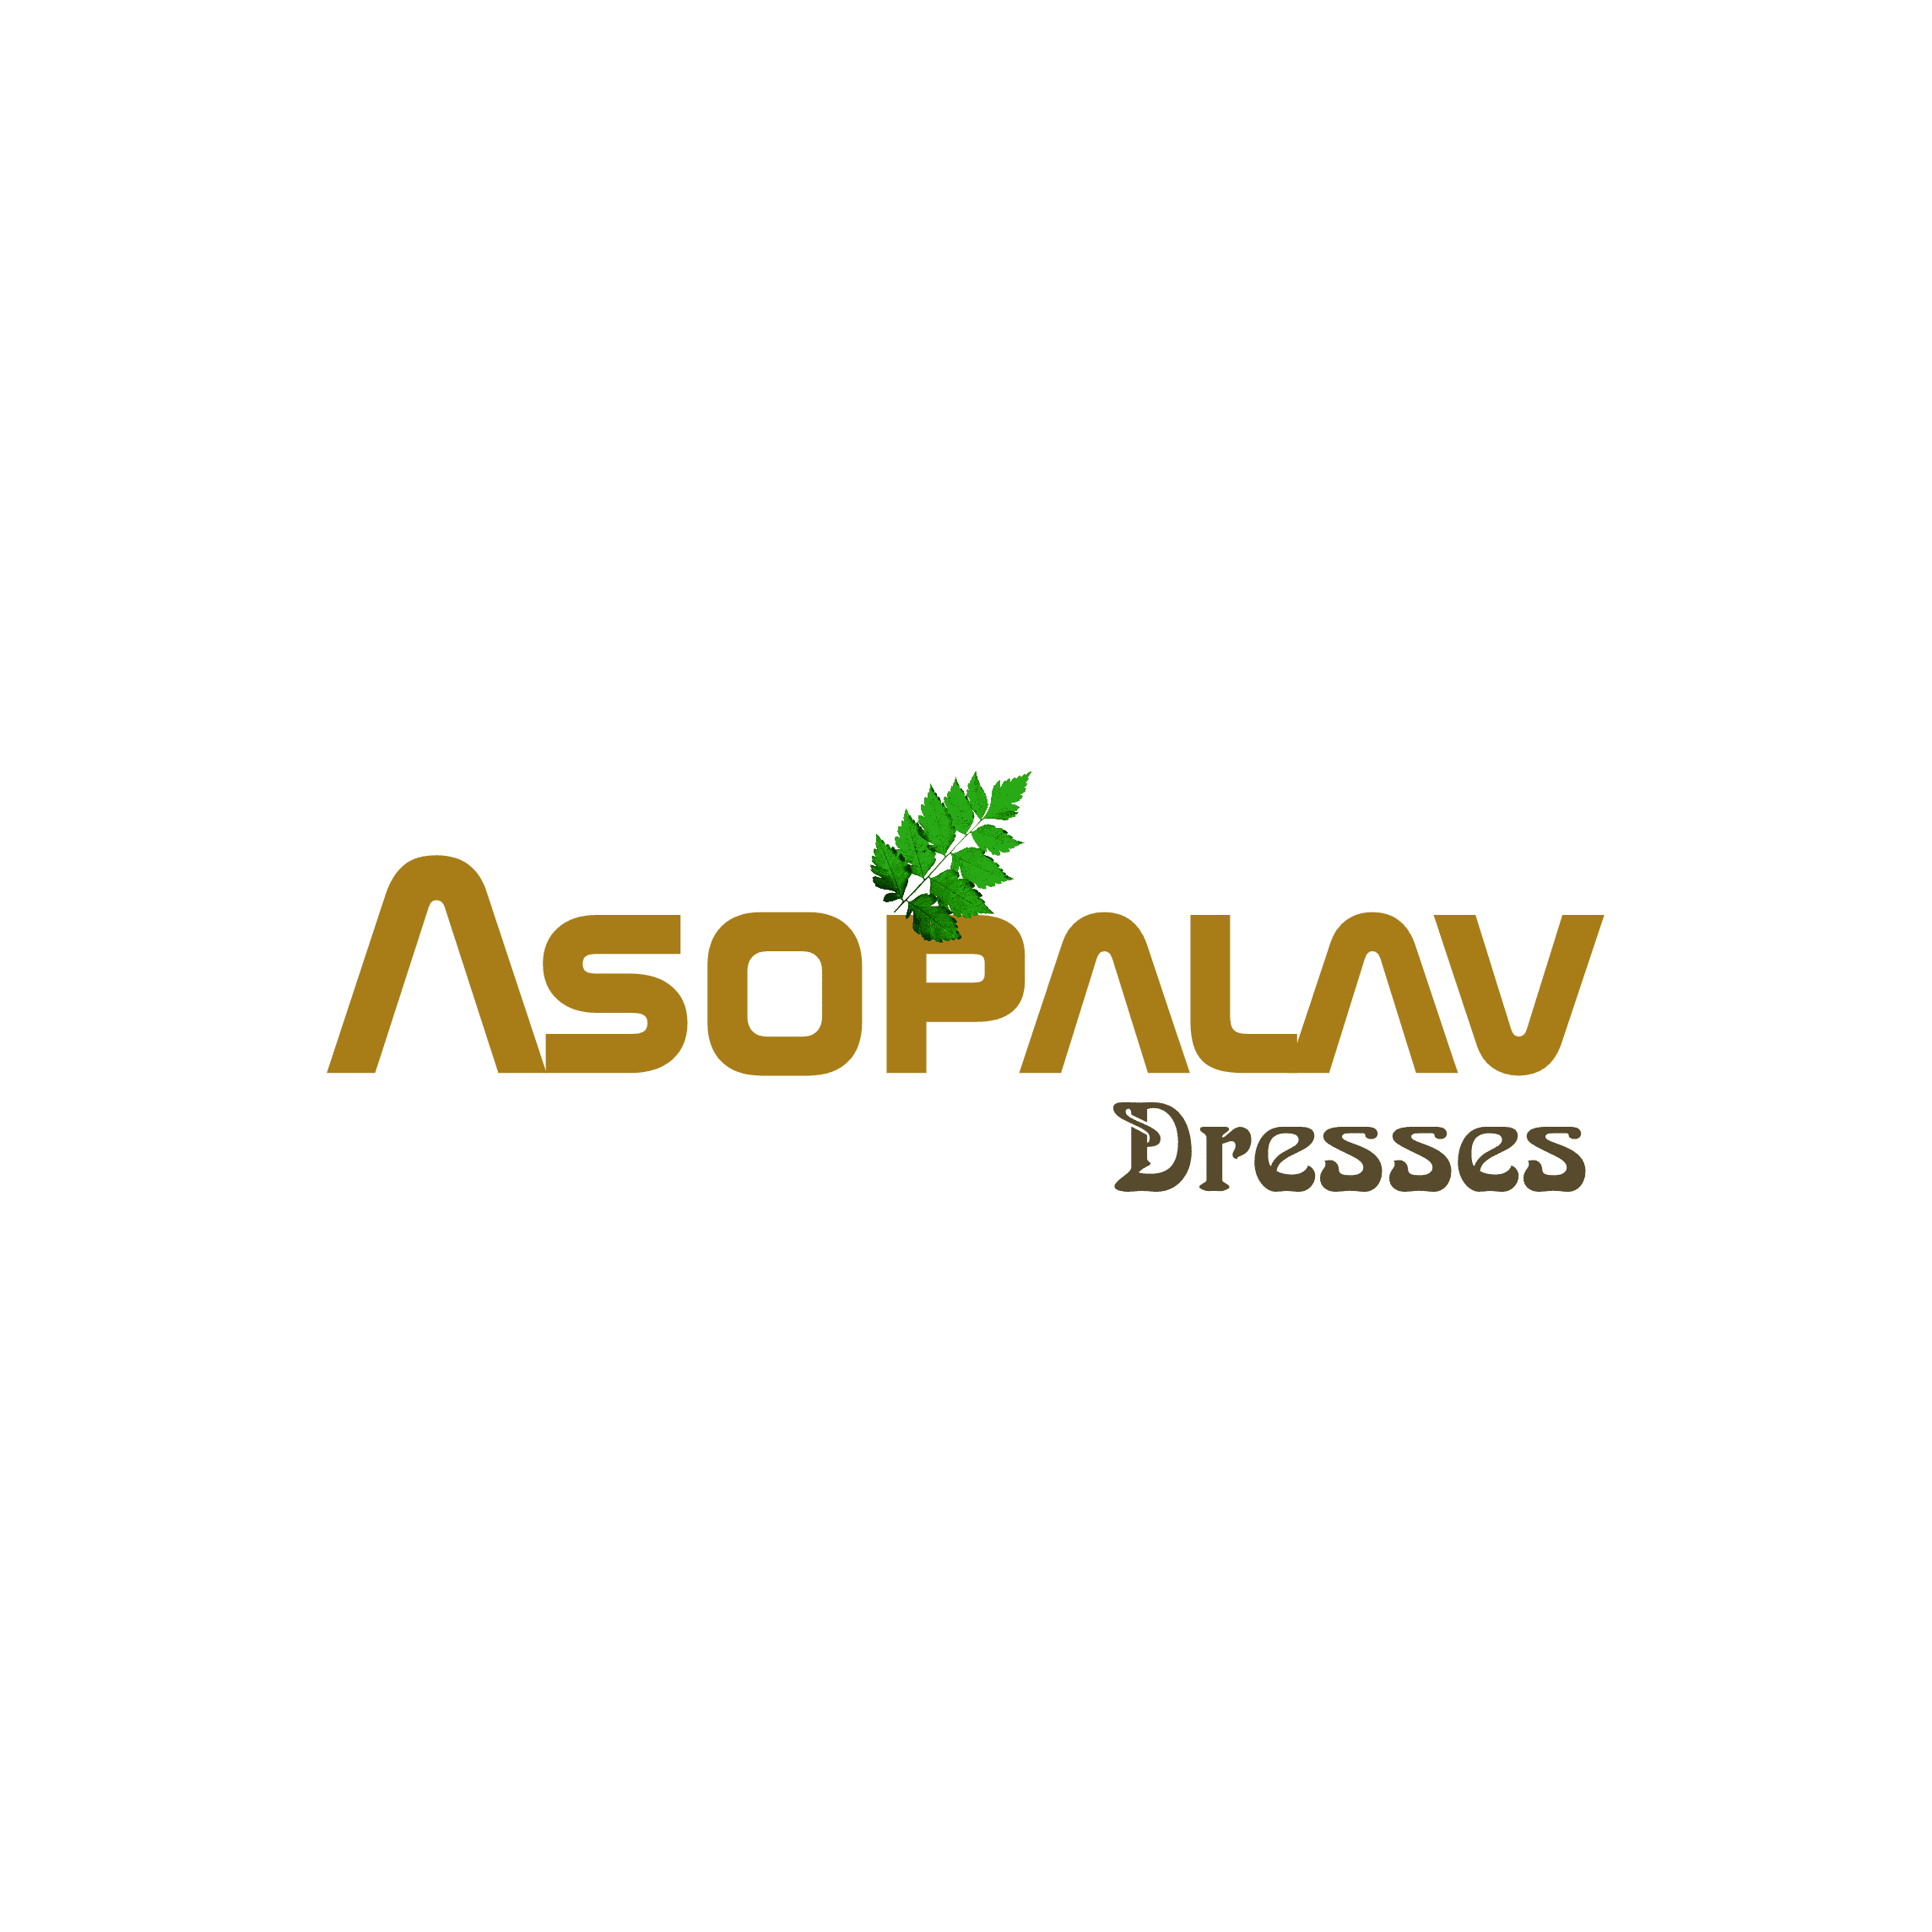 Asopalav Dresses